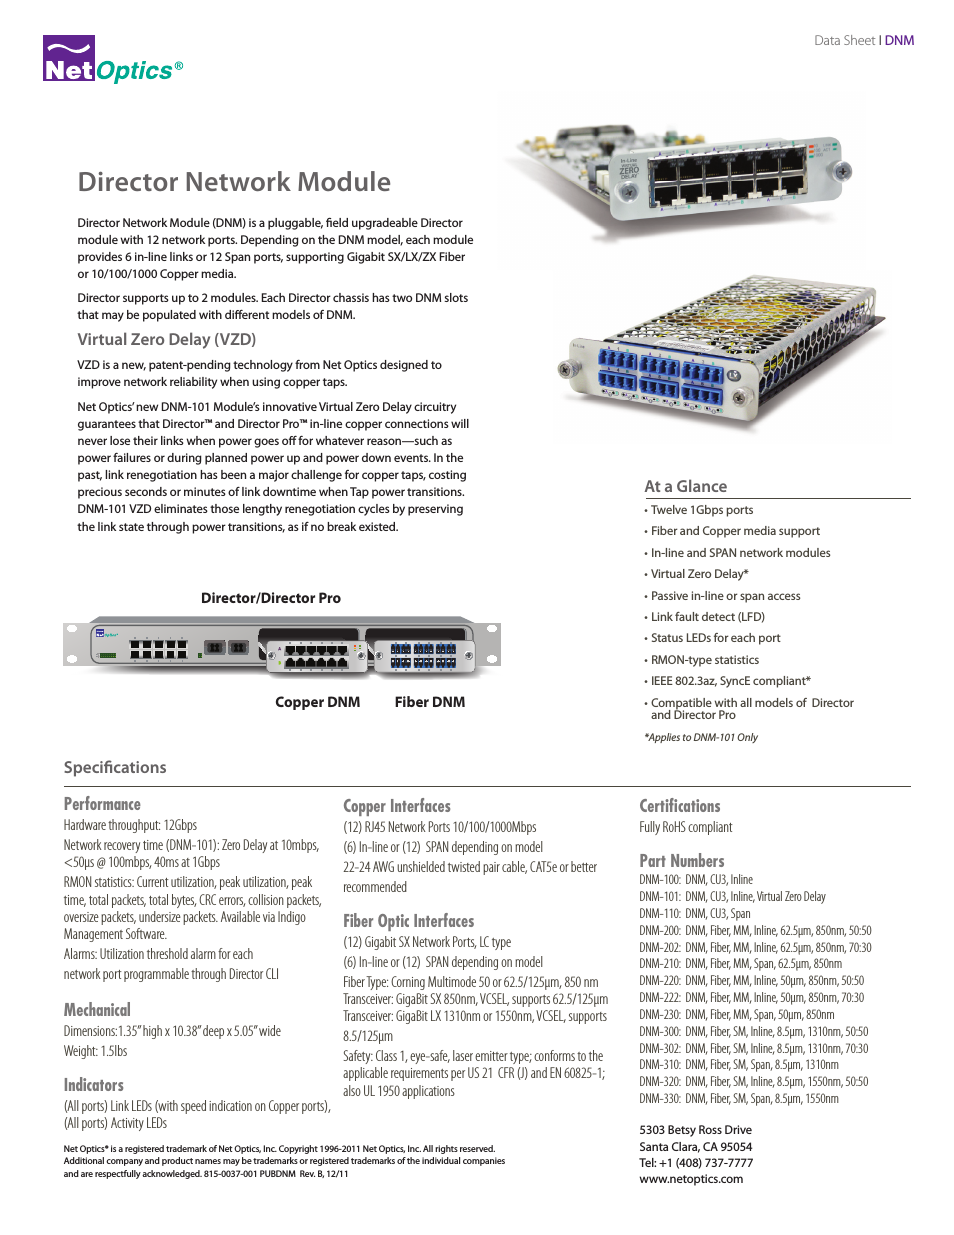 Director Network Module